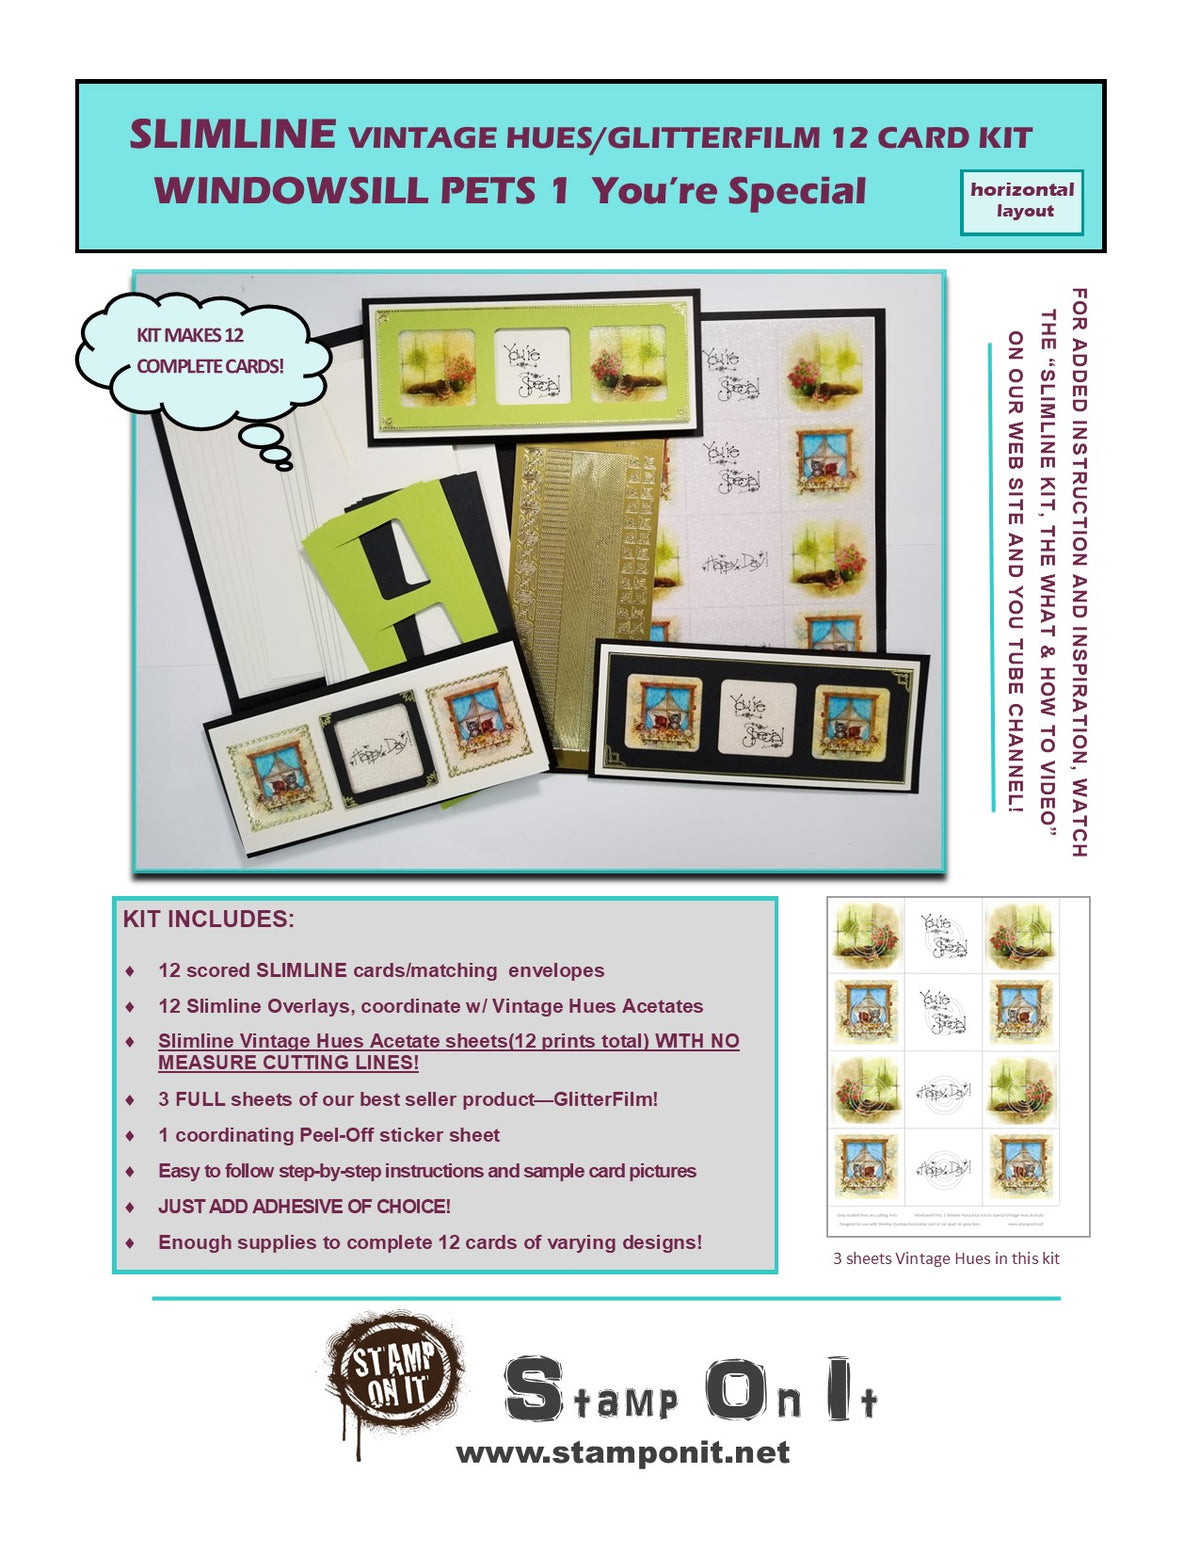 GlitterFilm & Vintage Hues 12 Slimline Card Kit Windowsill Pets 1 You're Special